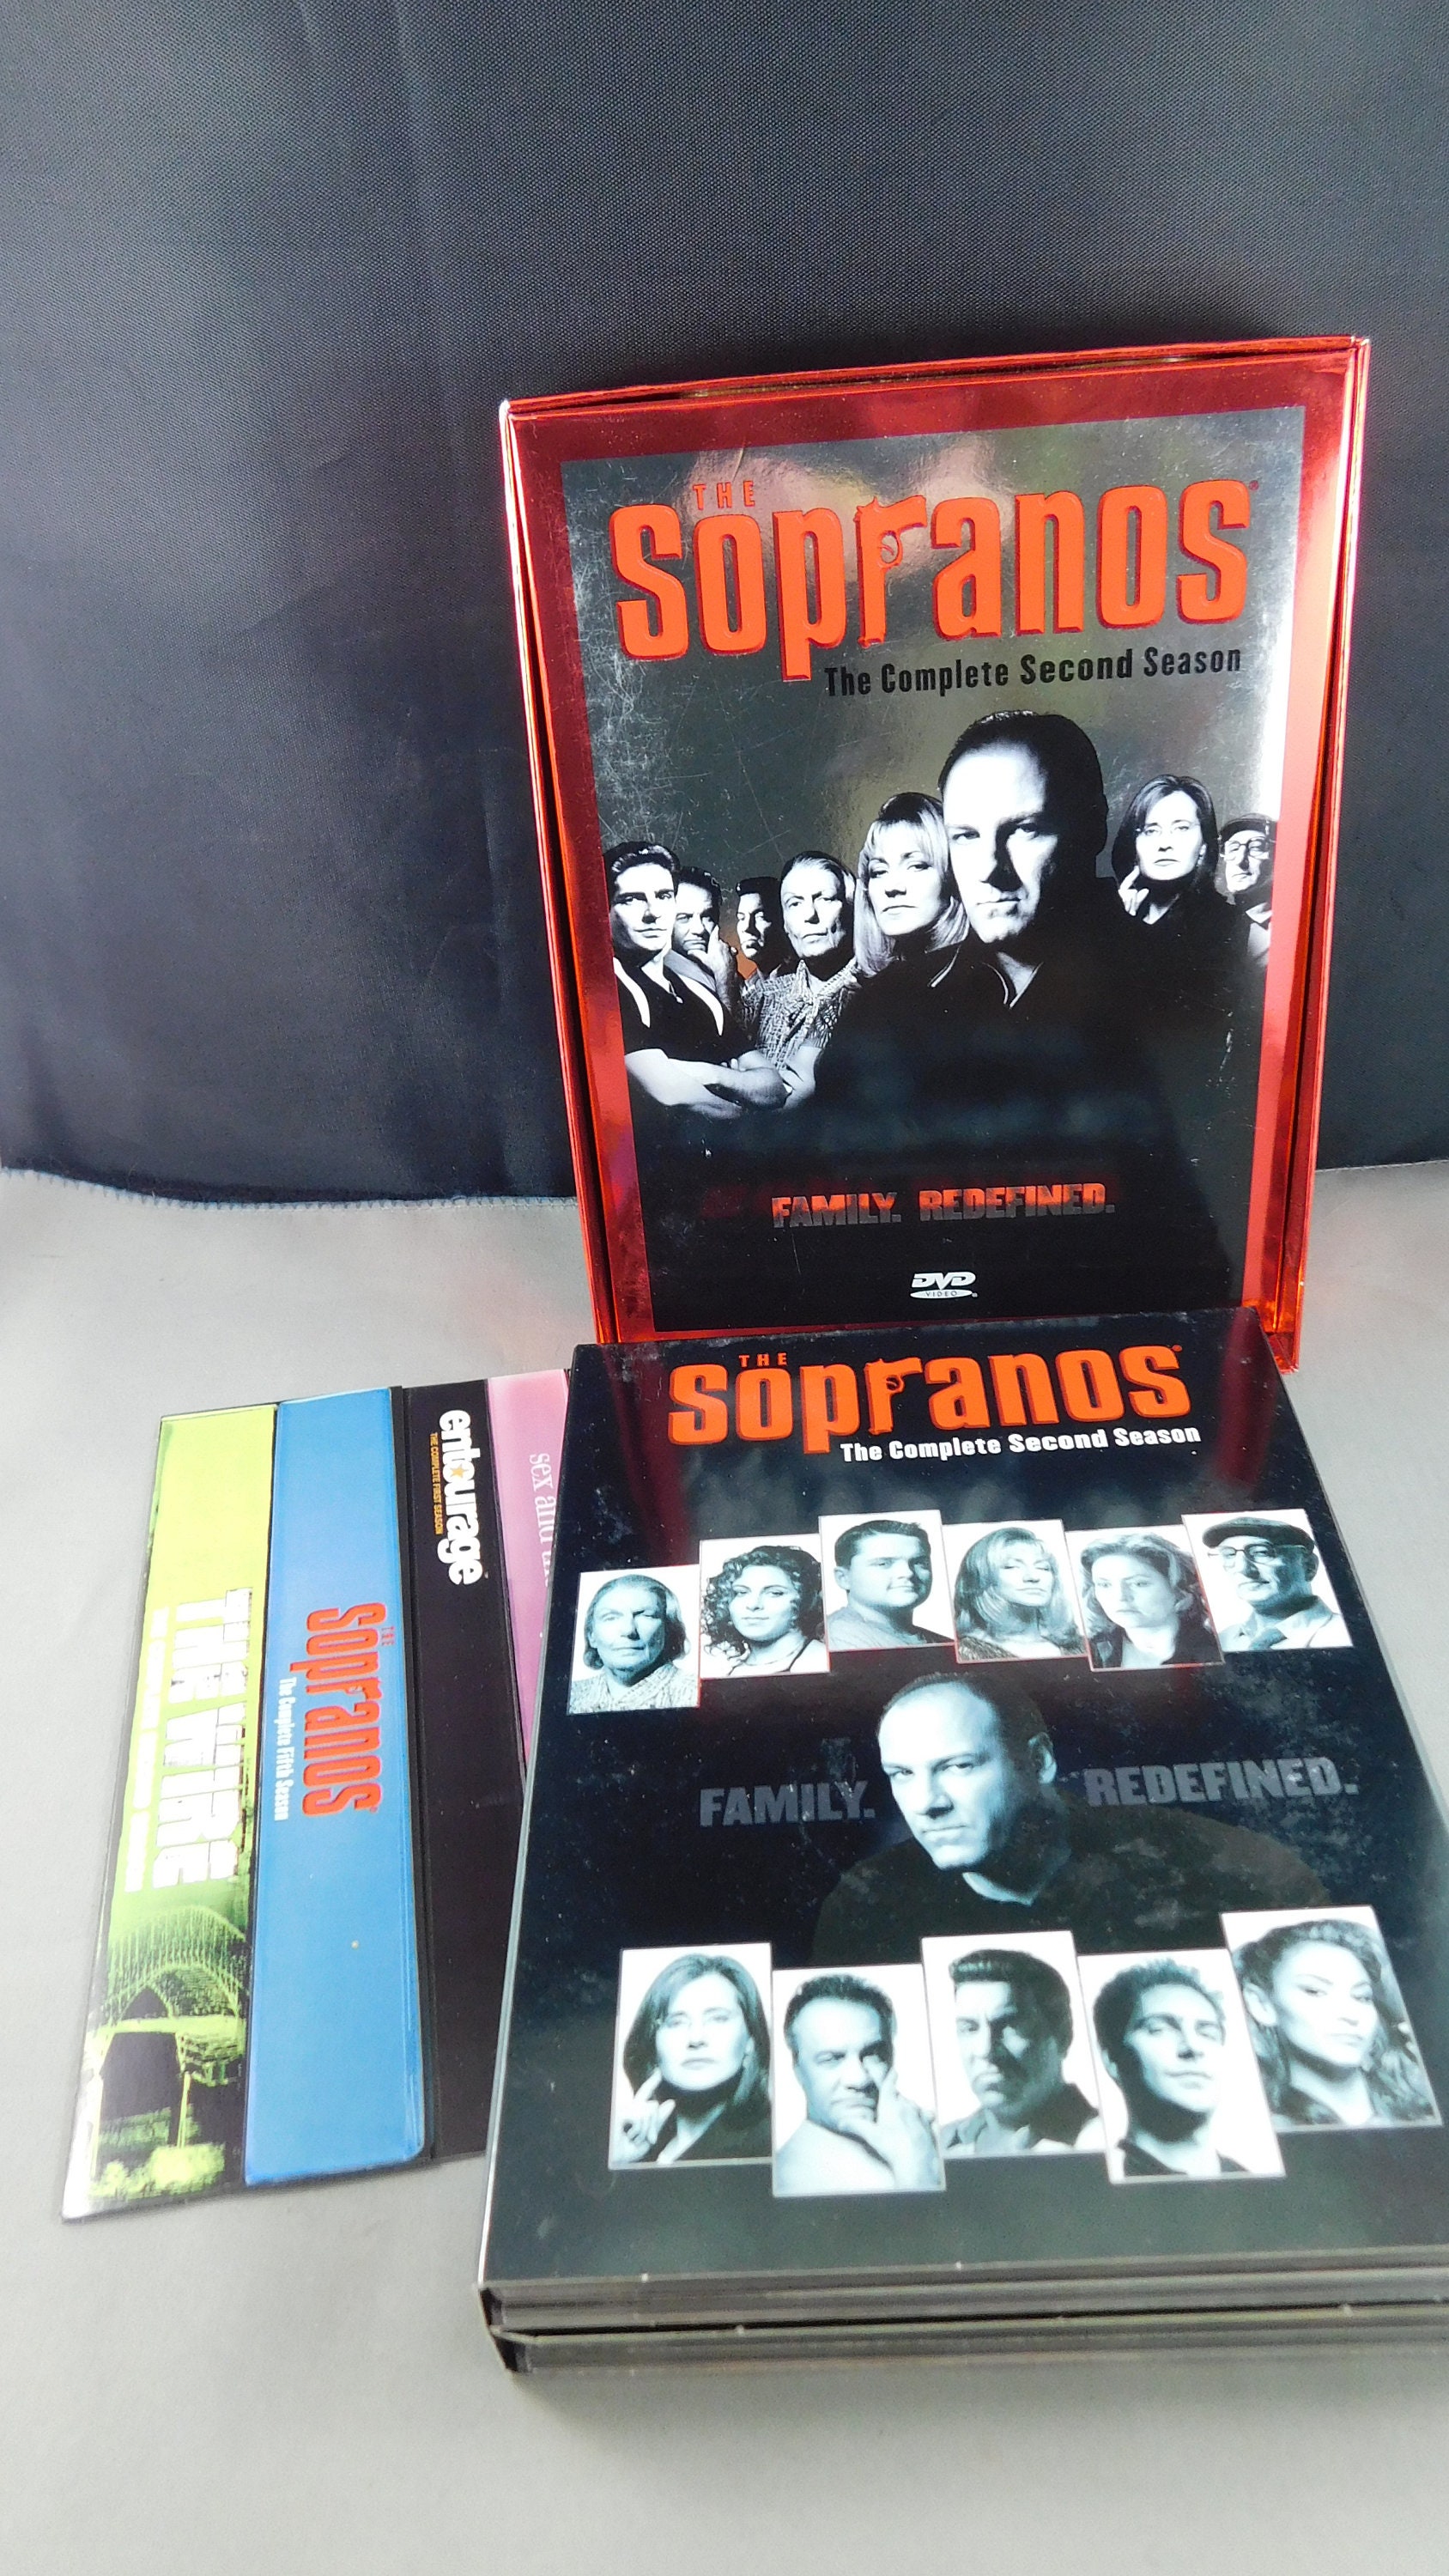 The Sopranos: the Complete Second Season DVD 